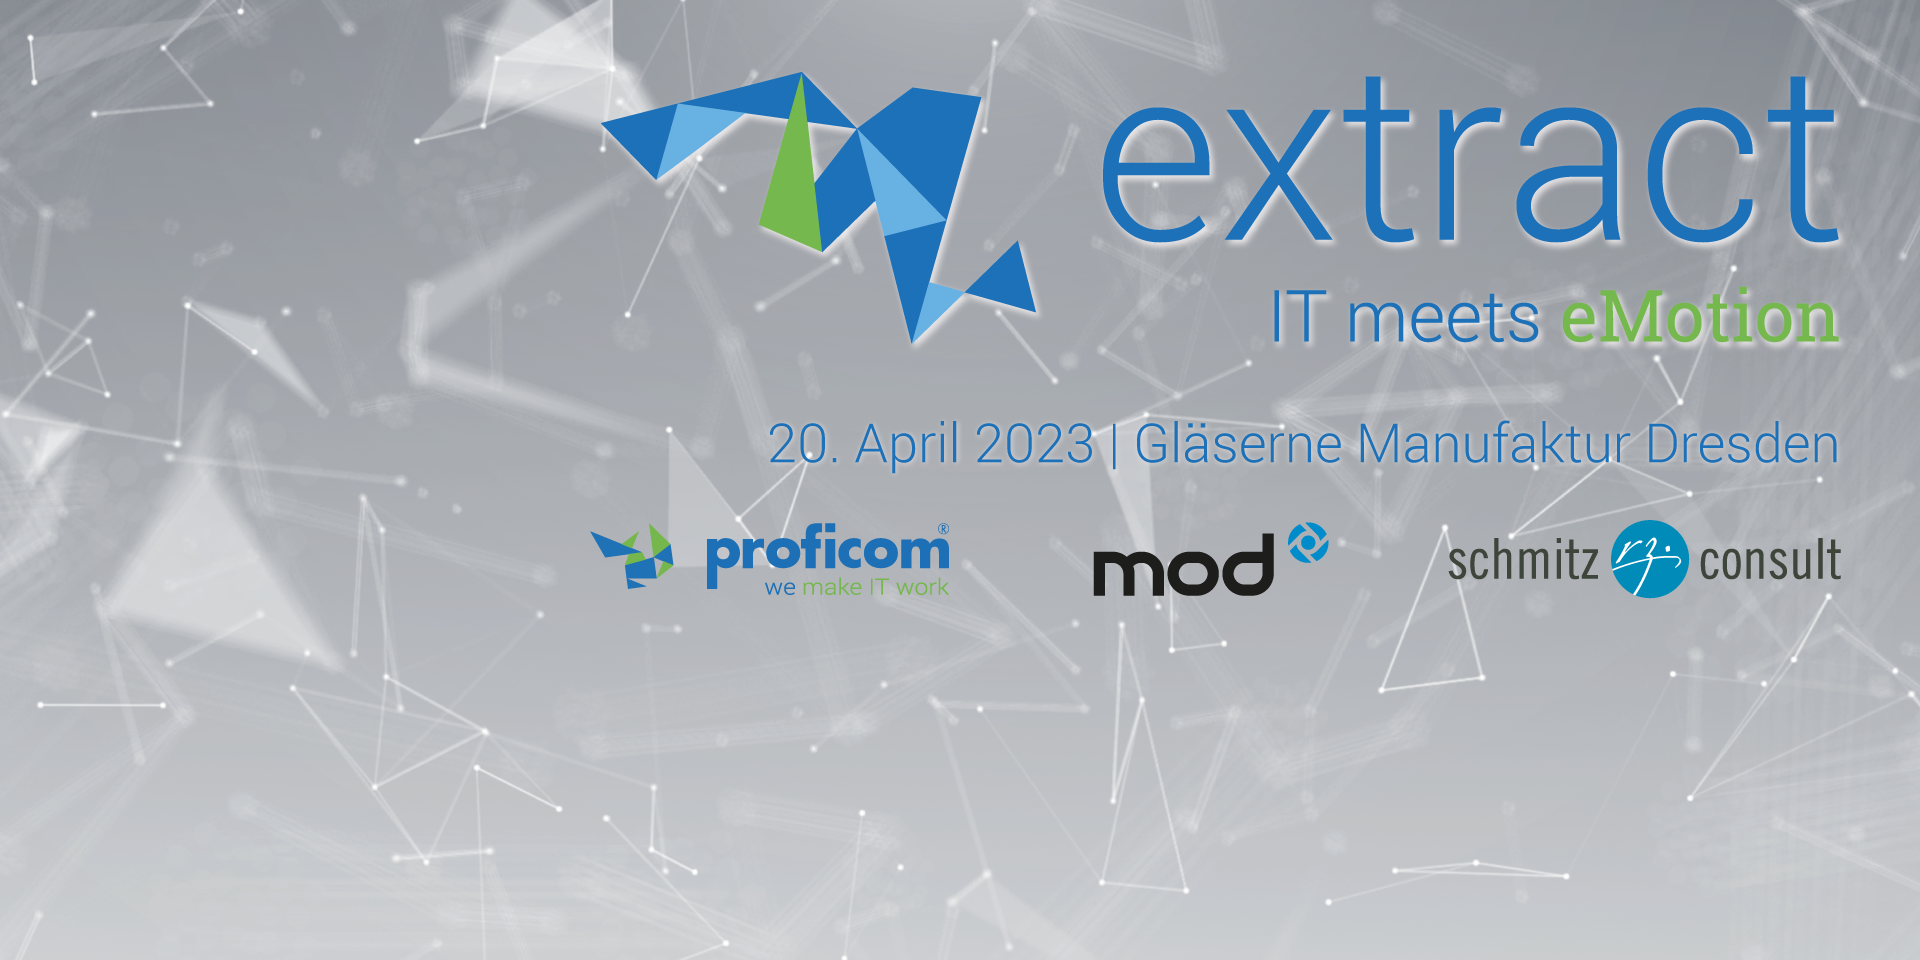 extract - IT meets eMotion | Die Fachkonferenz am 20. April 2023 in Dresden